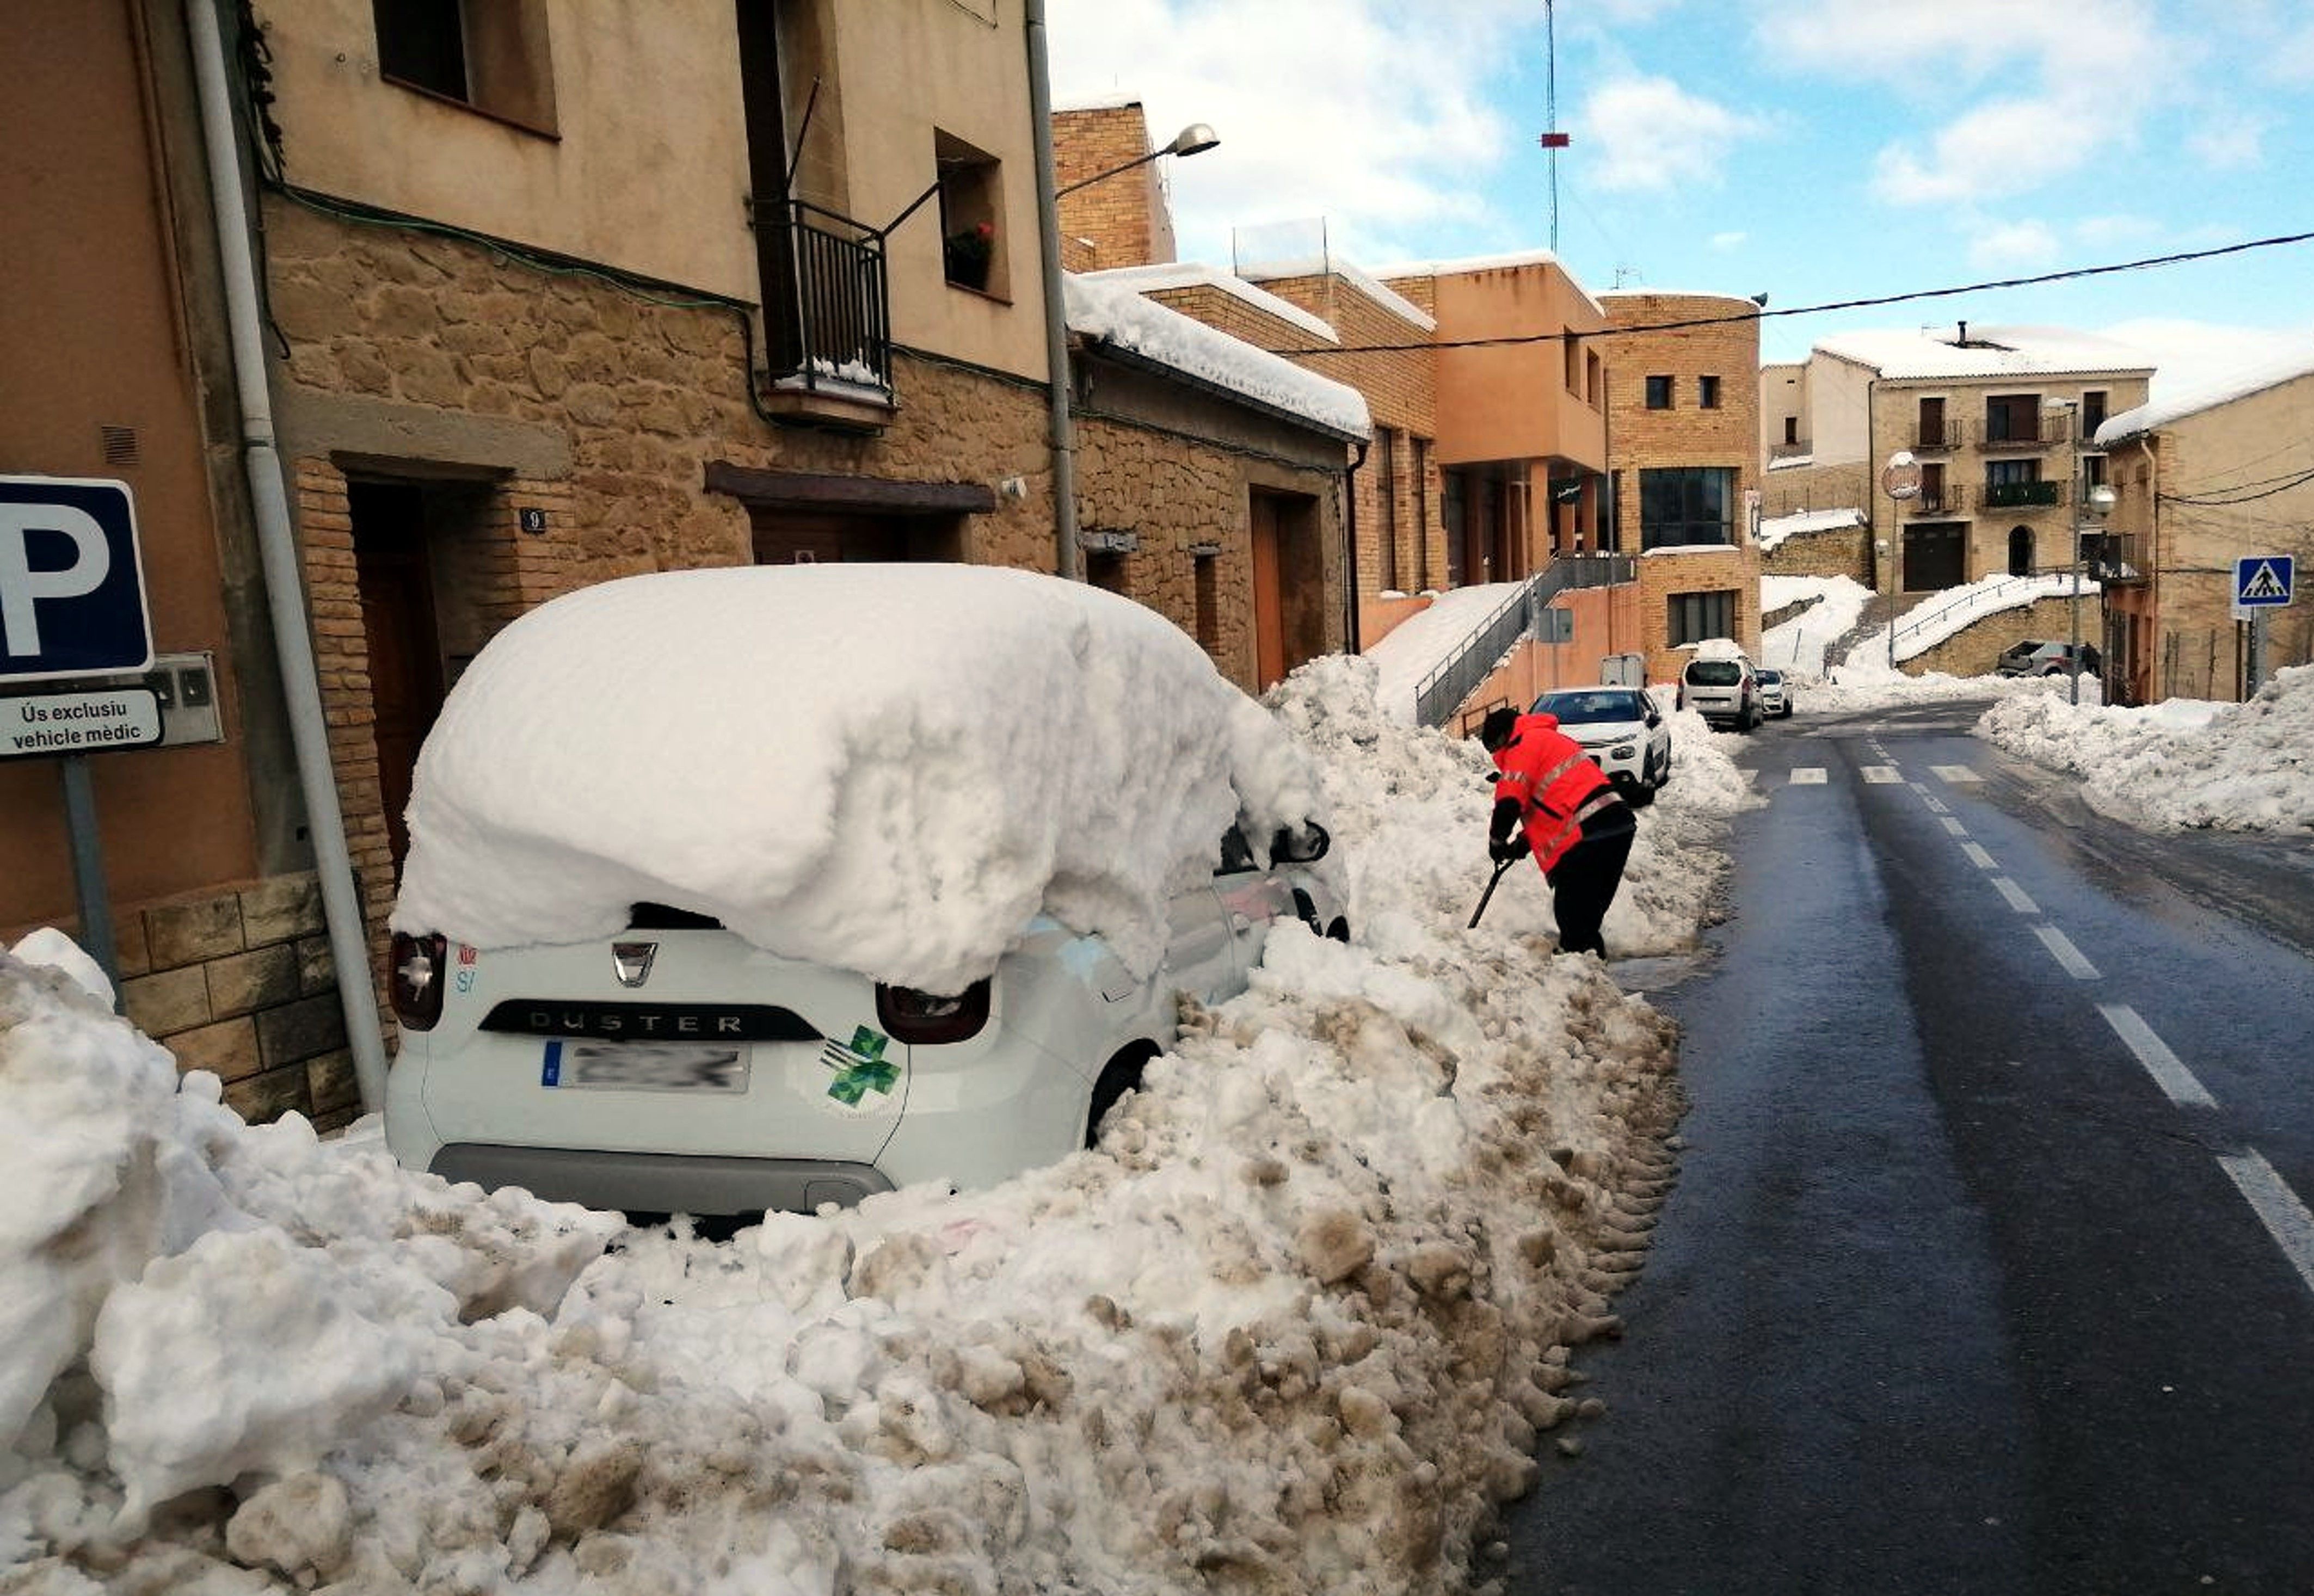 Bombers quitando nieve Horta de Sant Joan / Bombers